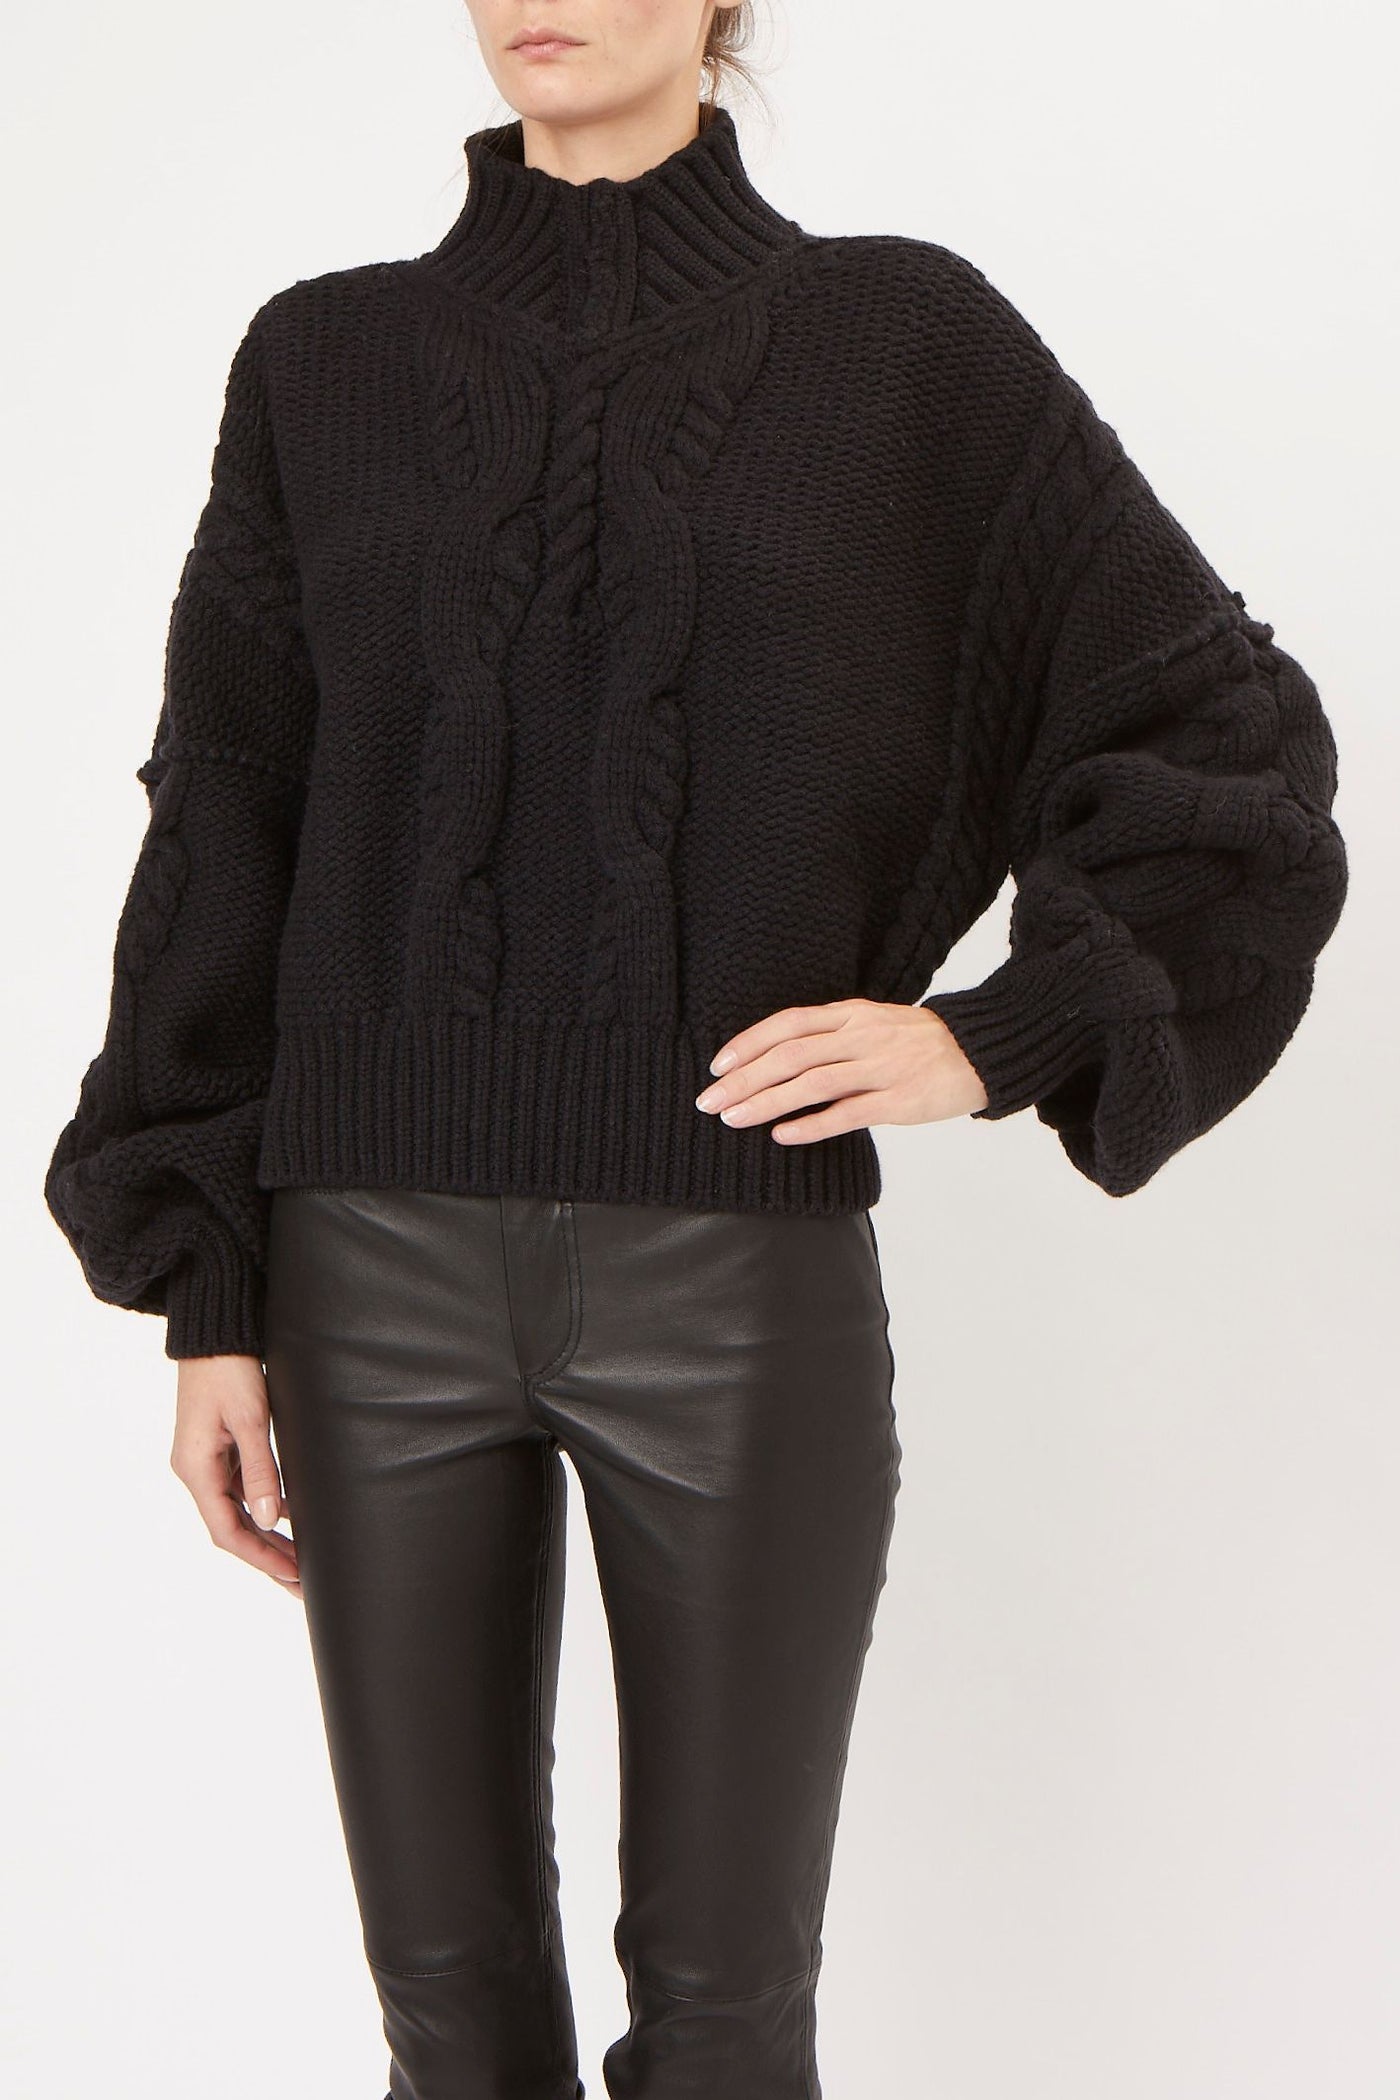 Iro Paris - Lyme Oversized Knit Turtleneck Sweater